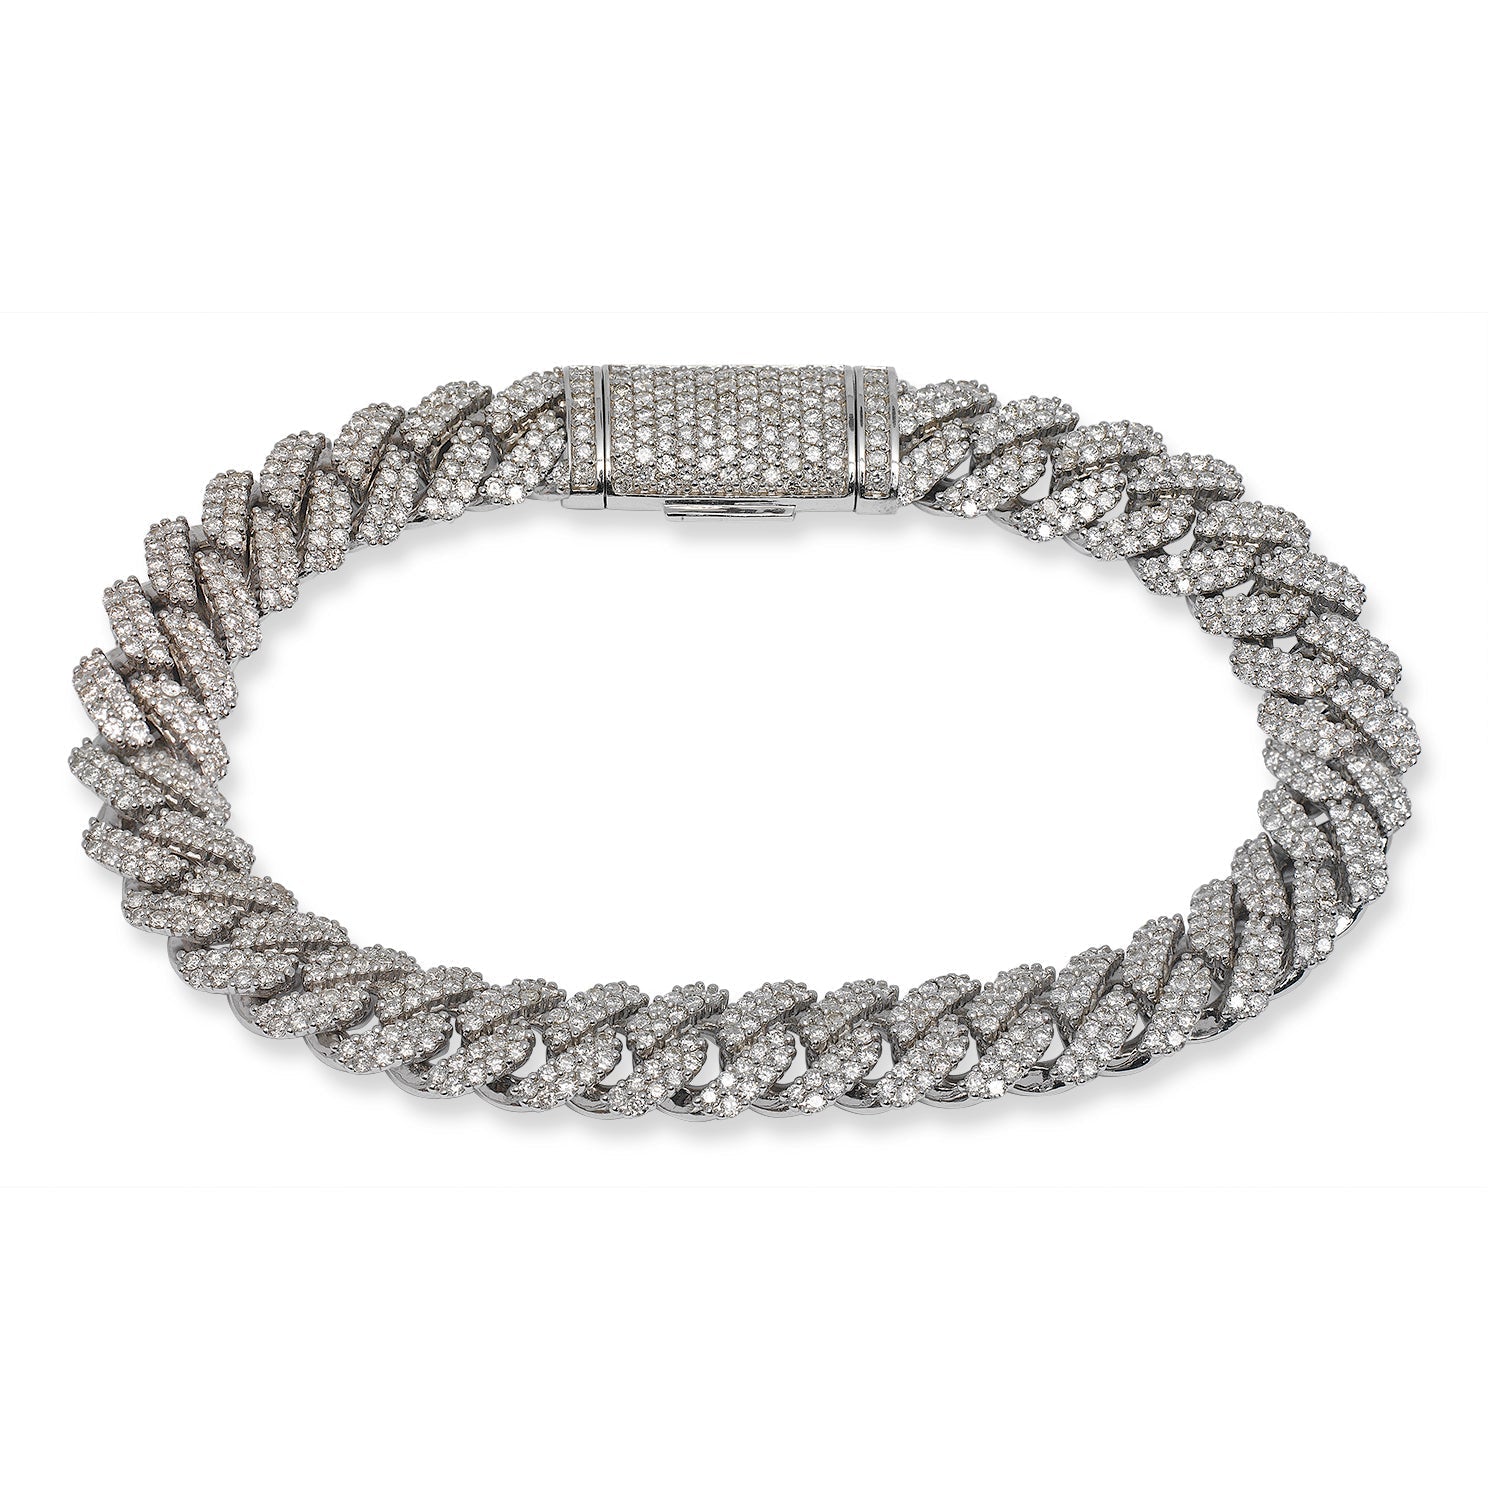 If & Co. Diamond Cuban Link Bracelet